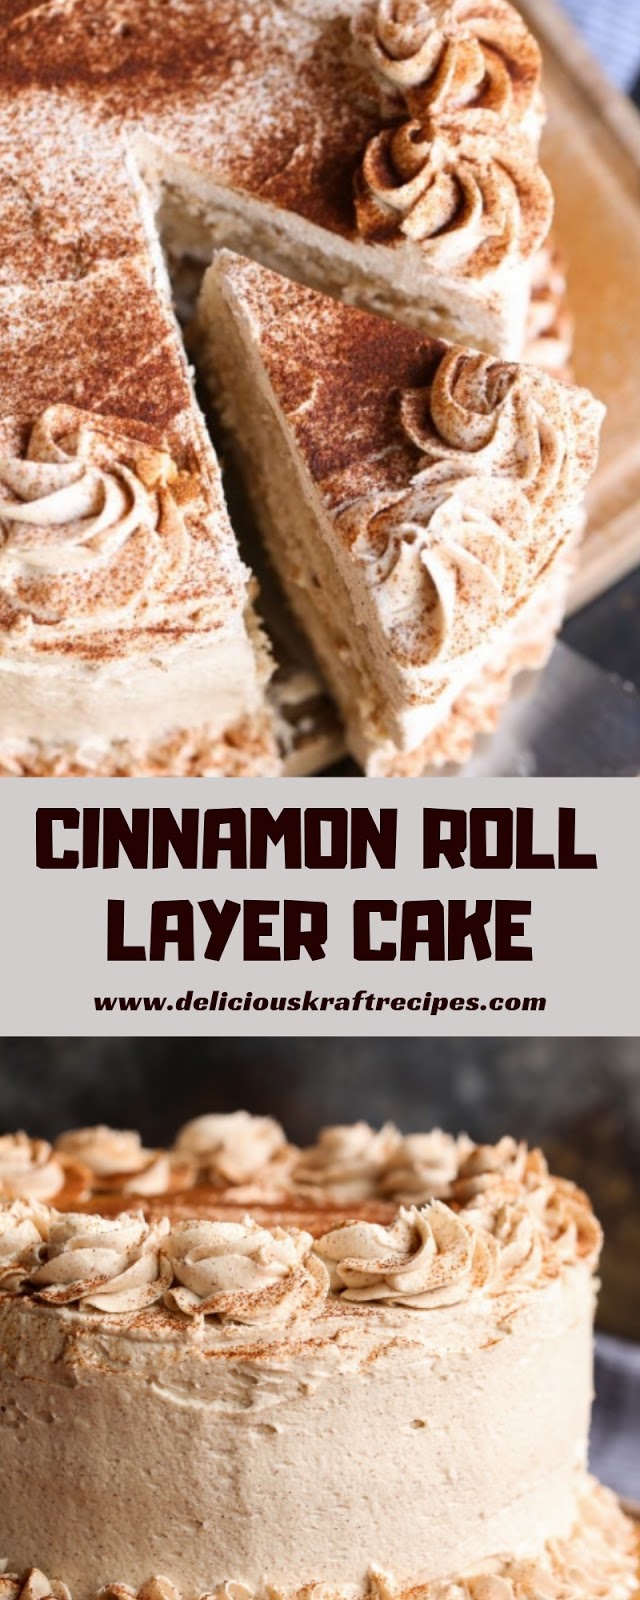 CINNAMON ROLL LAYER CAKE